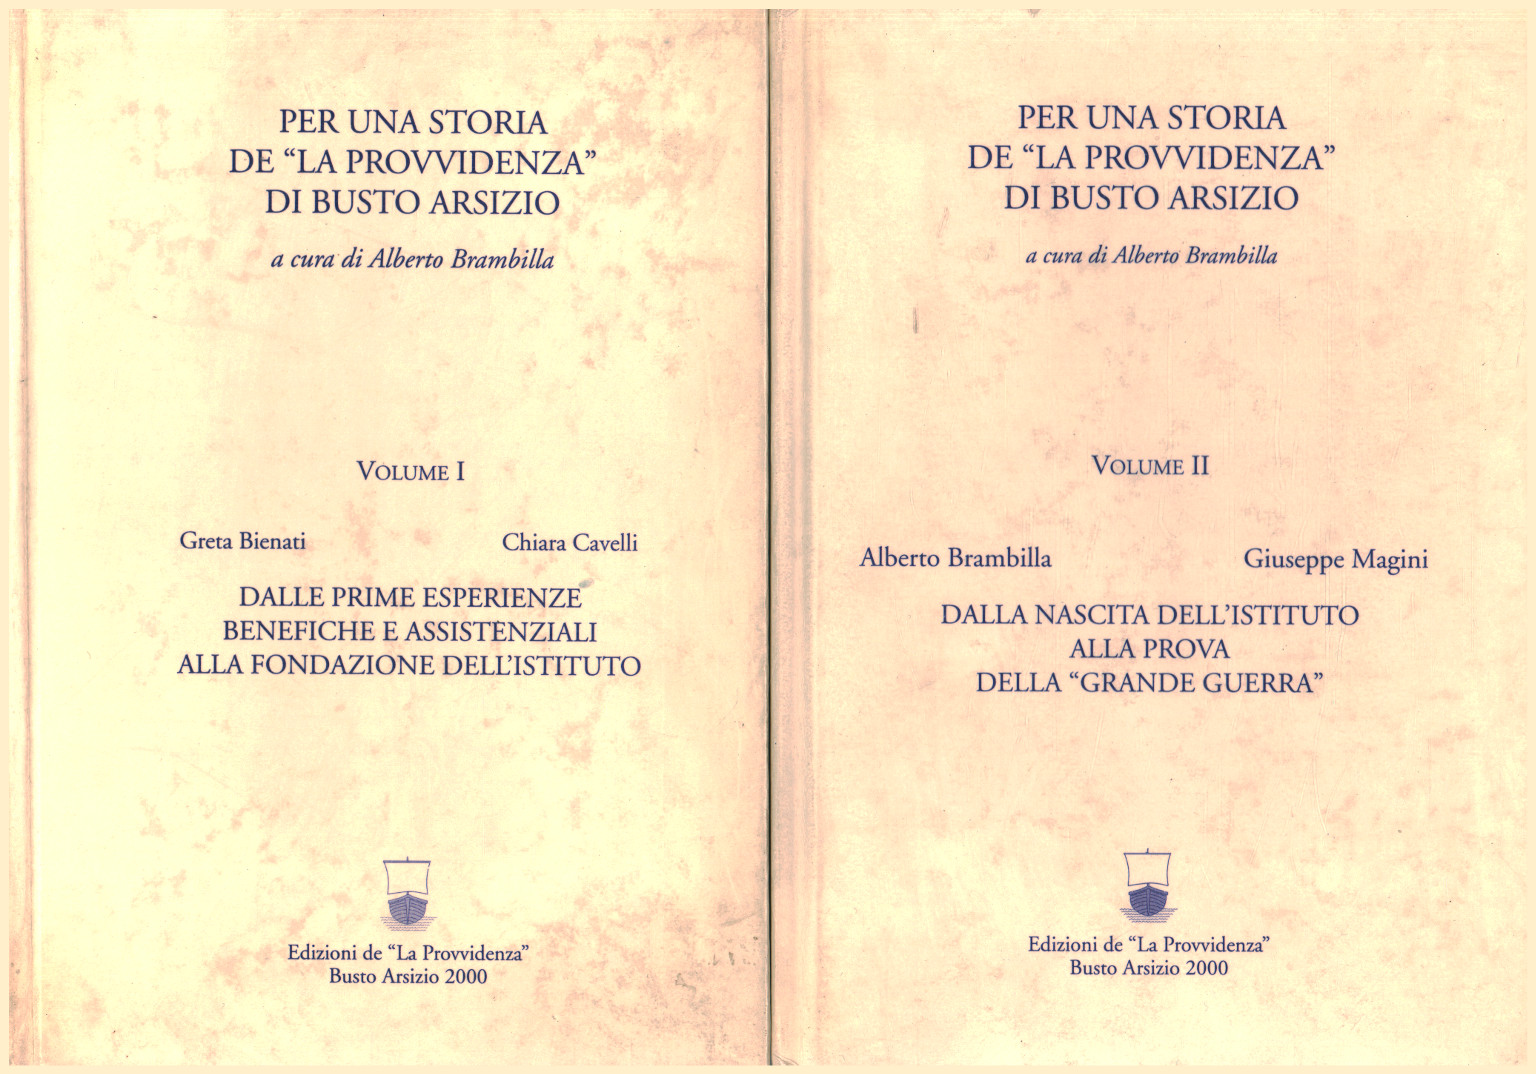 For a history of "providence" Bust Arsizi, Alberto Brambilla